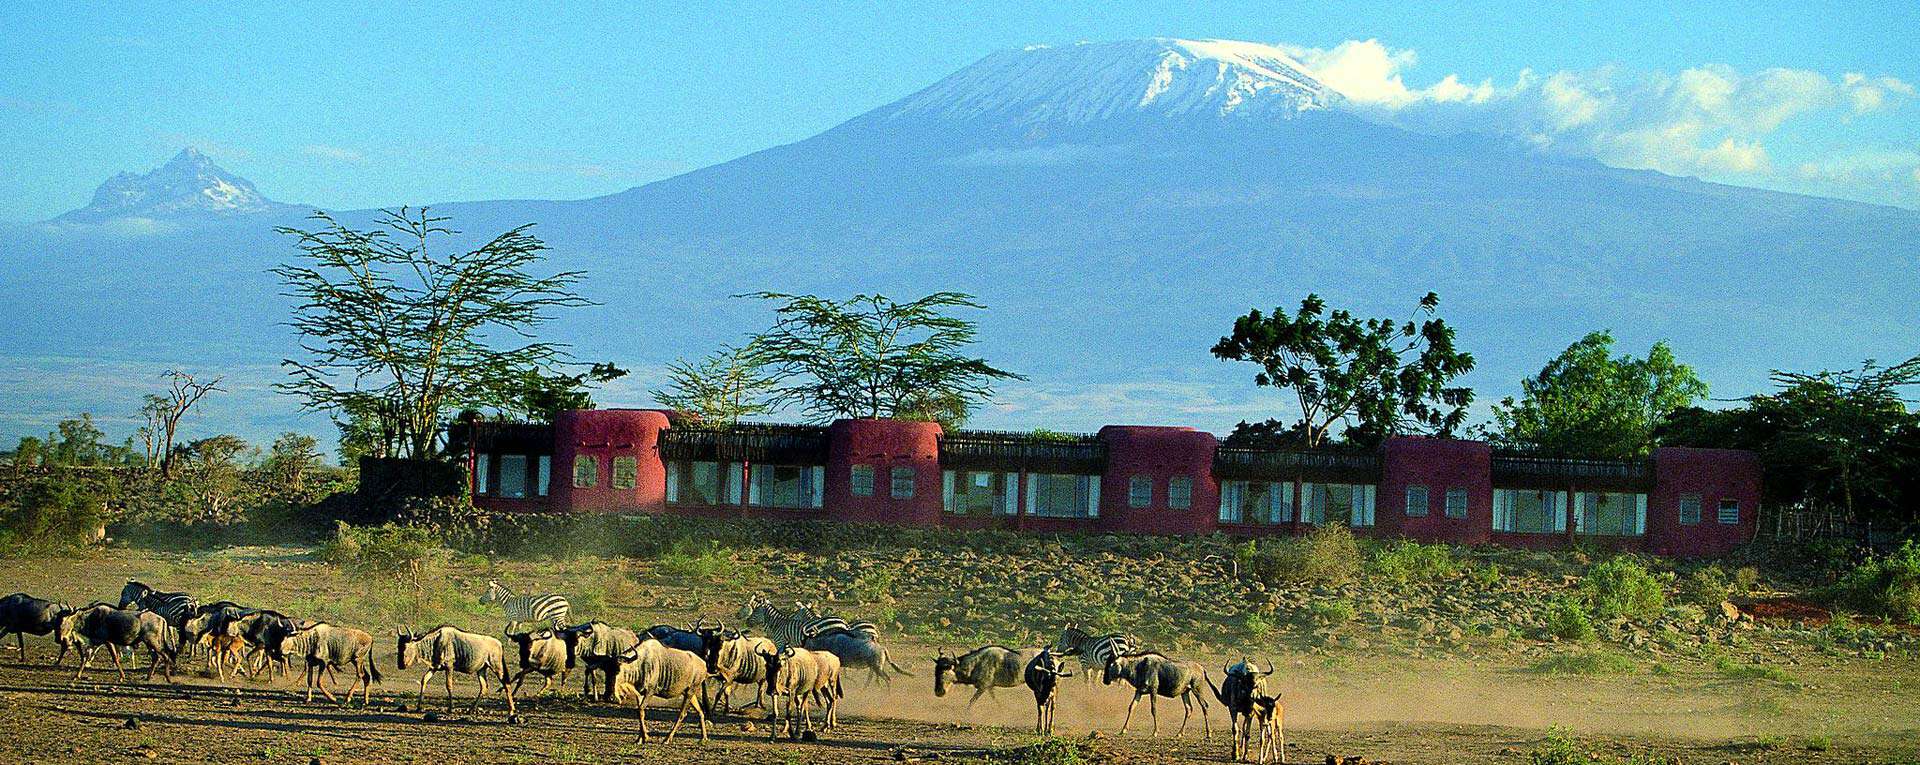 Amboseli Serena Safari Lodge - Kenya - AfricanMecca ...